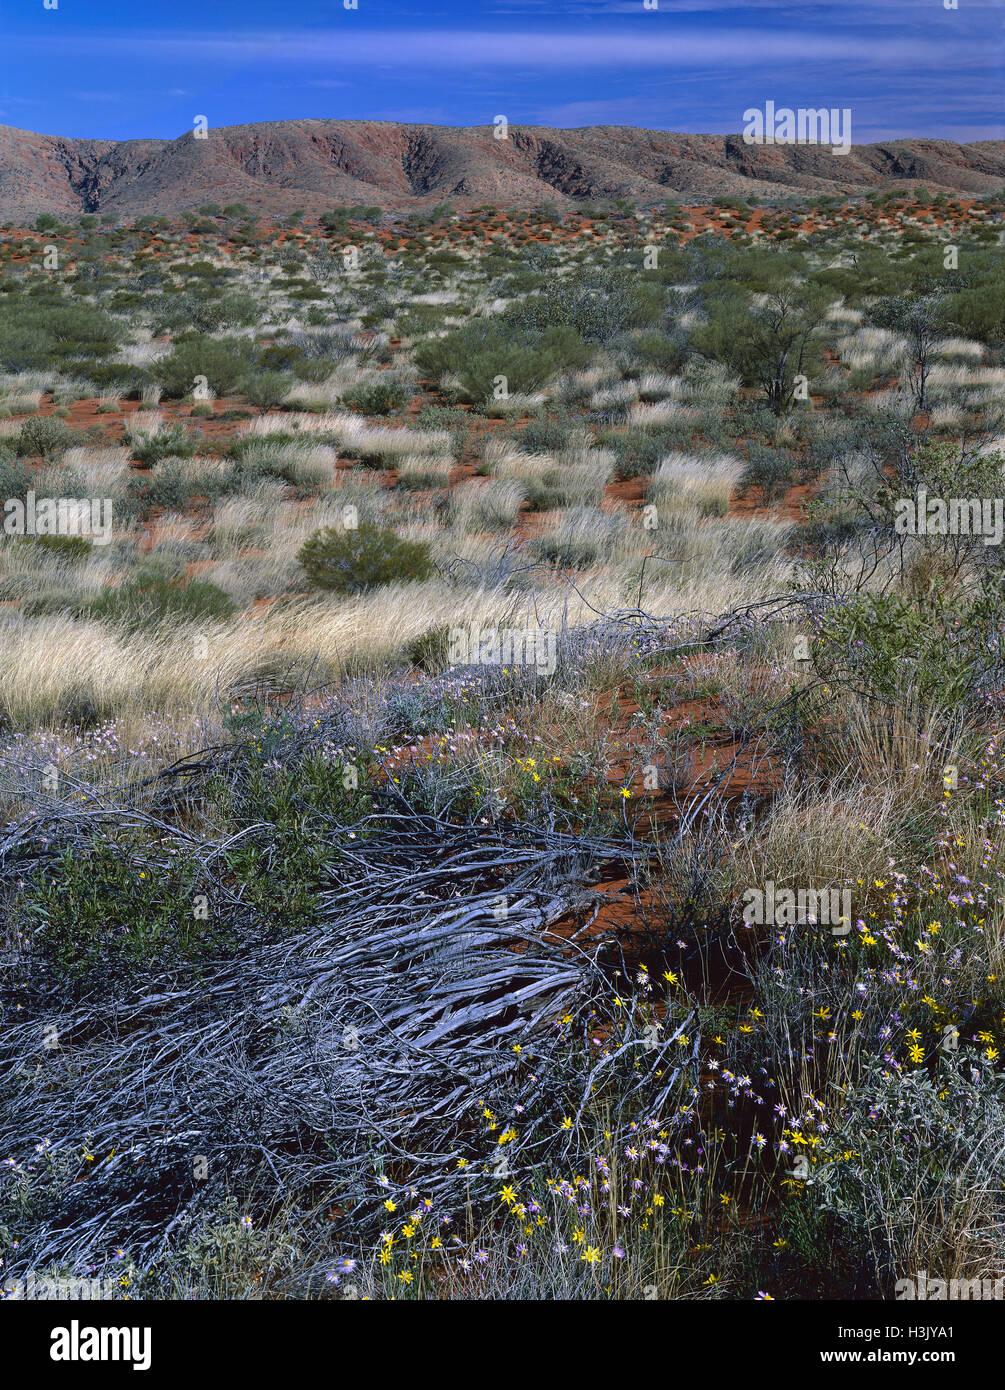 Desert with wildflowers in bloom, including Annual yellowtop (Senecio gregorii) Stock Photo